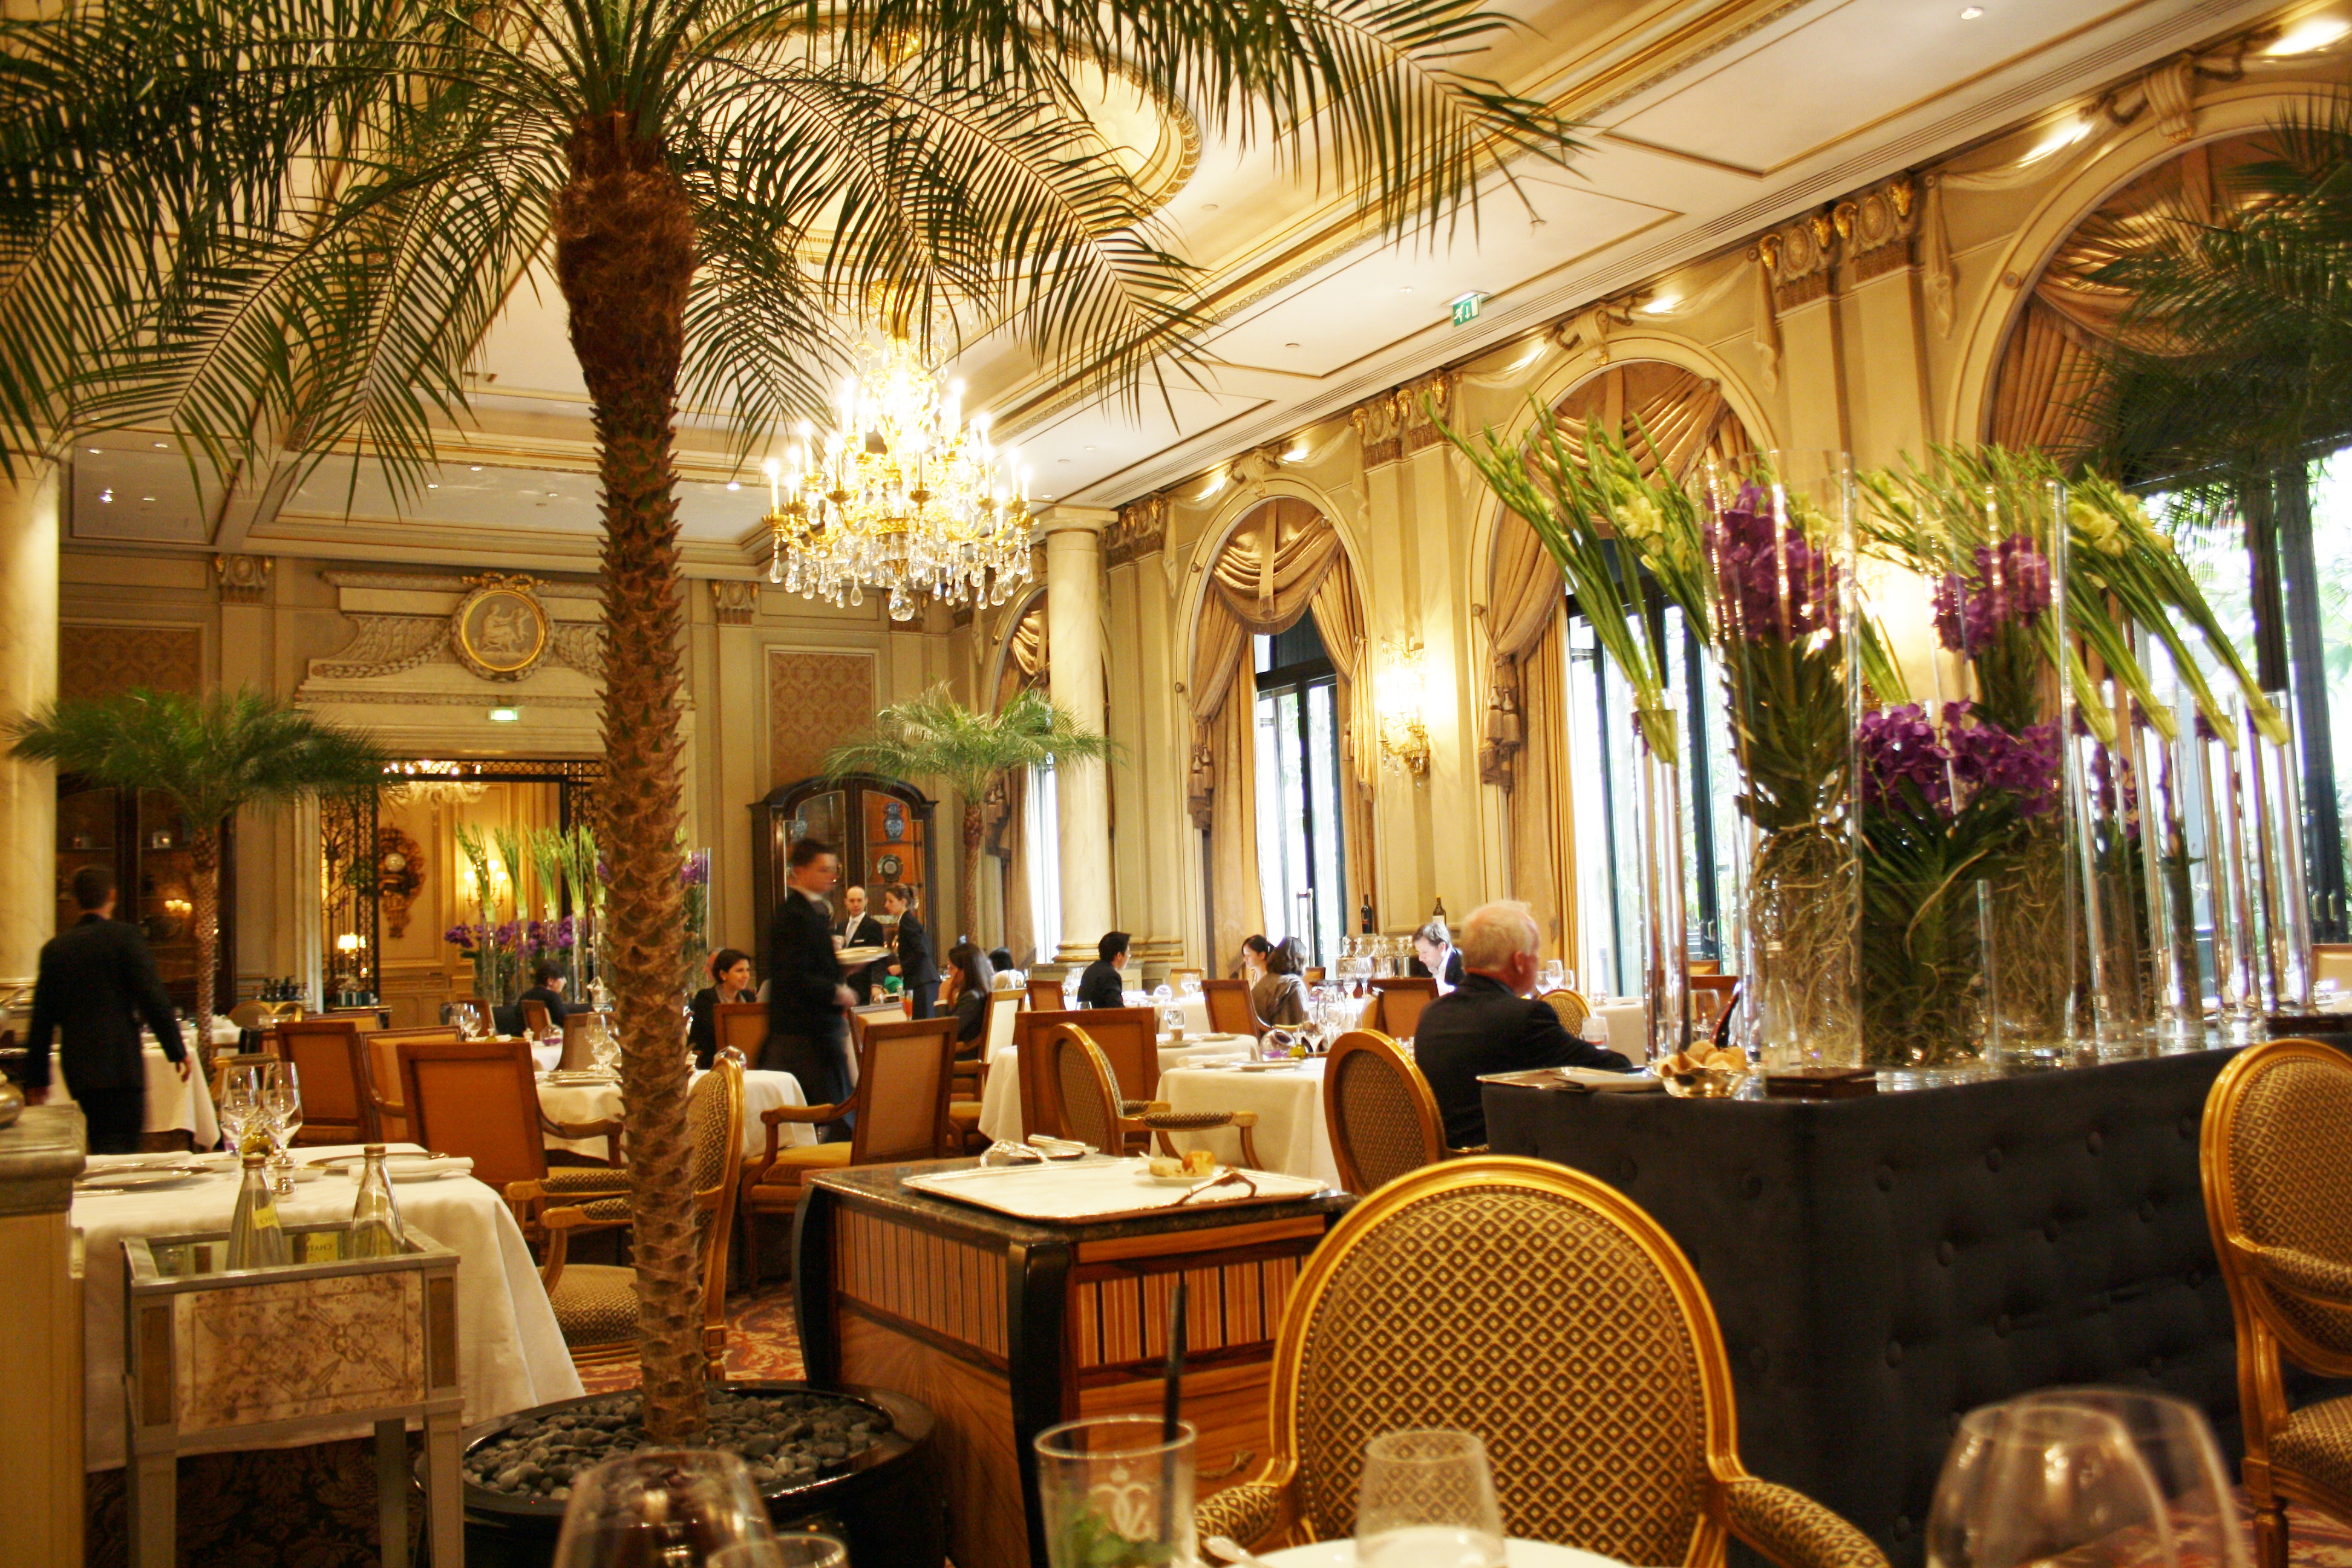 Название дорогих ресторанов. Le cinq ресторан в Париже. Ресторан Мишлен в Париже. Париж рестораны Мишлен 3 звезды. Лучший ресторан Парижа Мишлен.